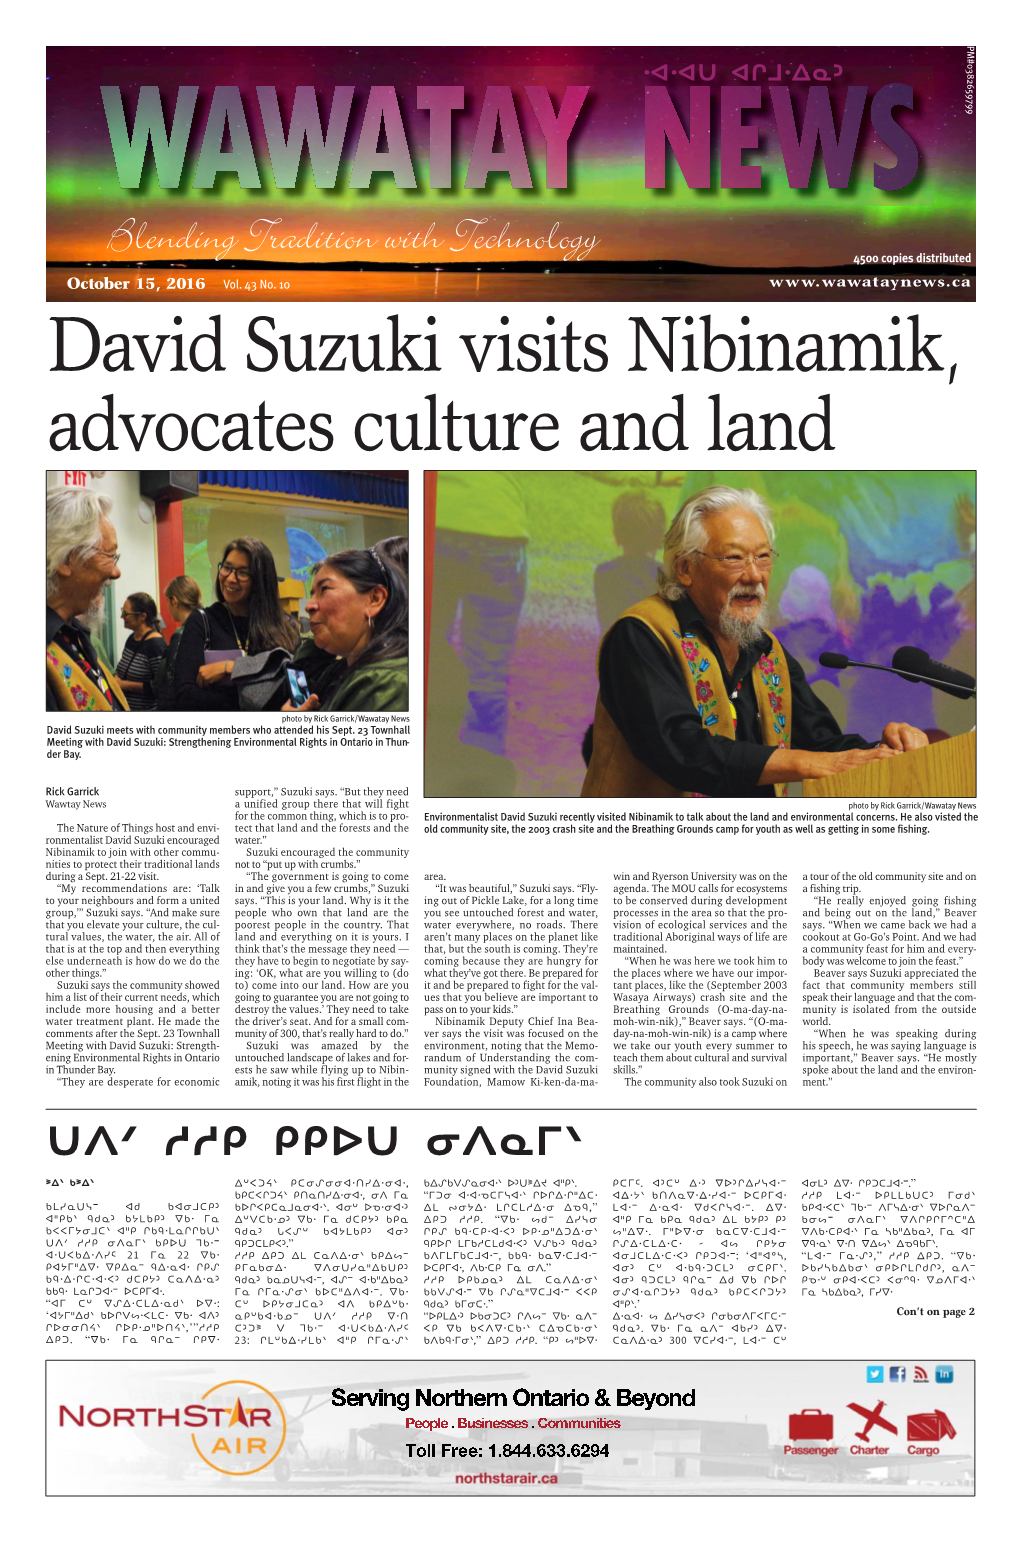 David Suzuki Visits Nibinamik, Advocates Culture and Land